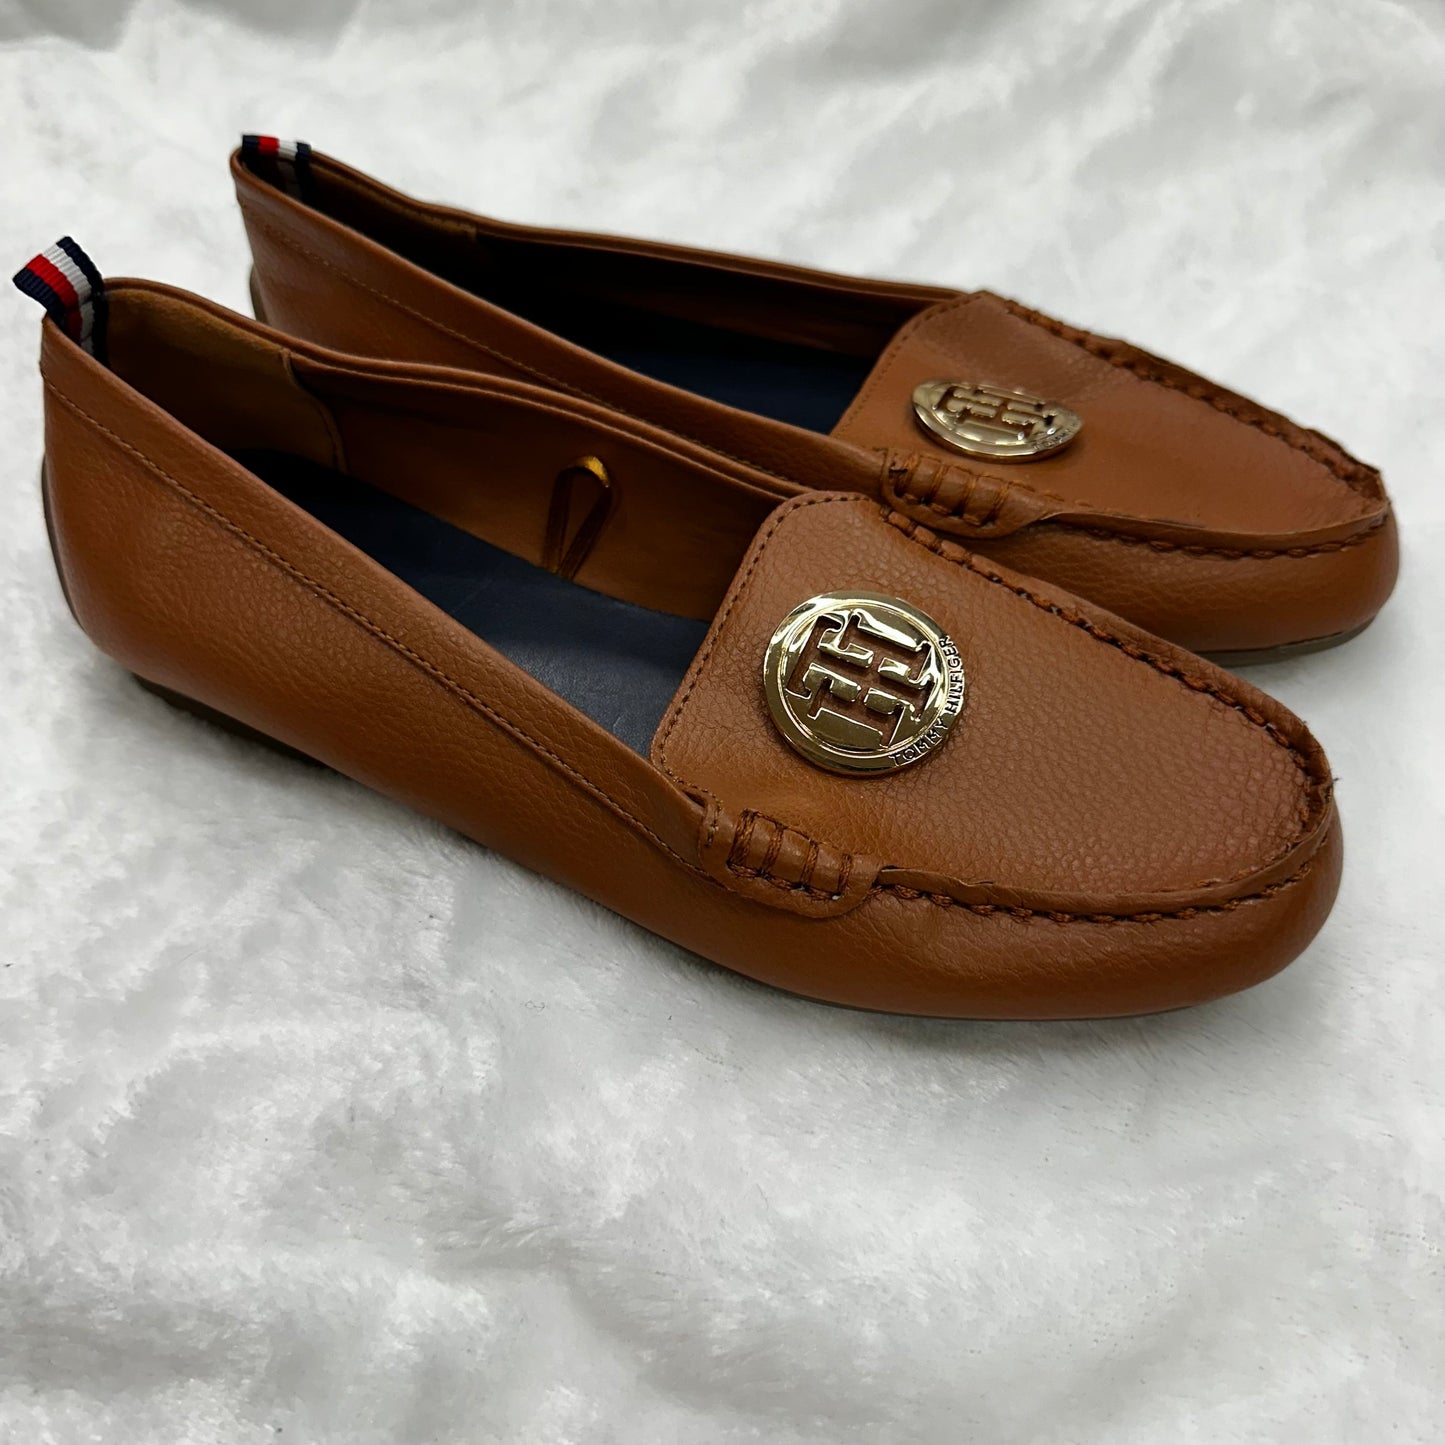 Camel Shoes Flats Loafer Oxford Tommy Hilfiger O, Size 6.5